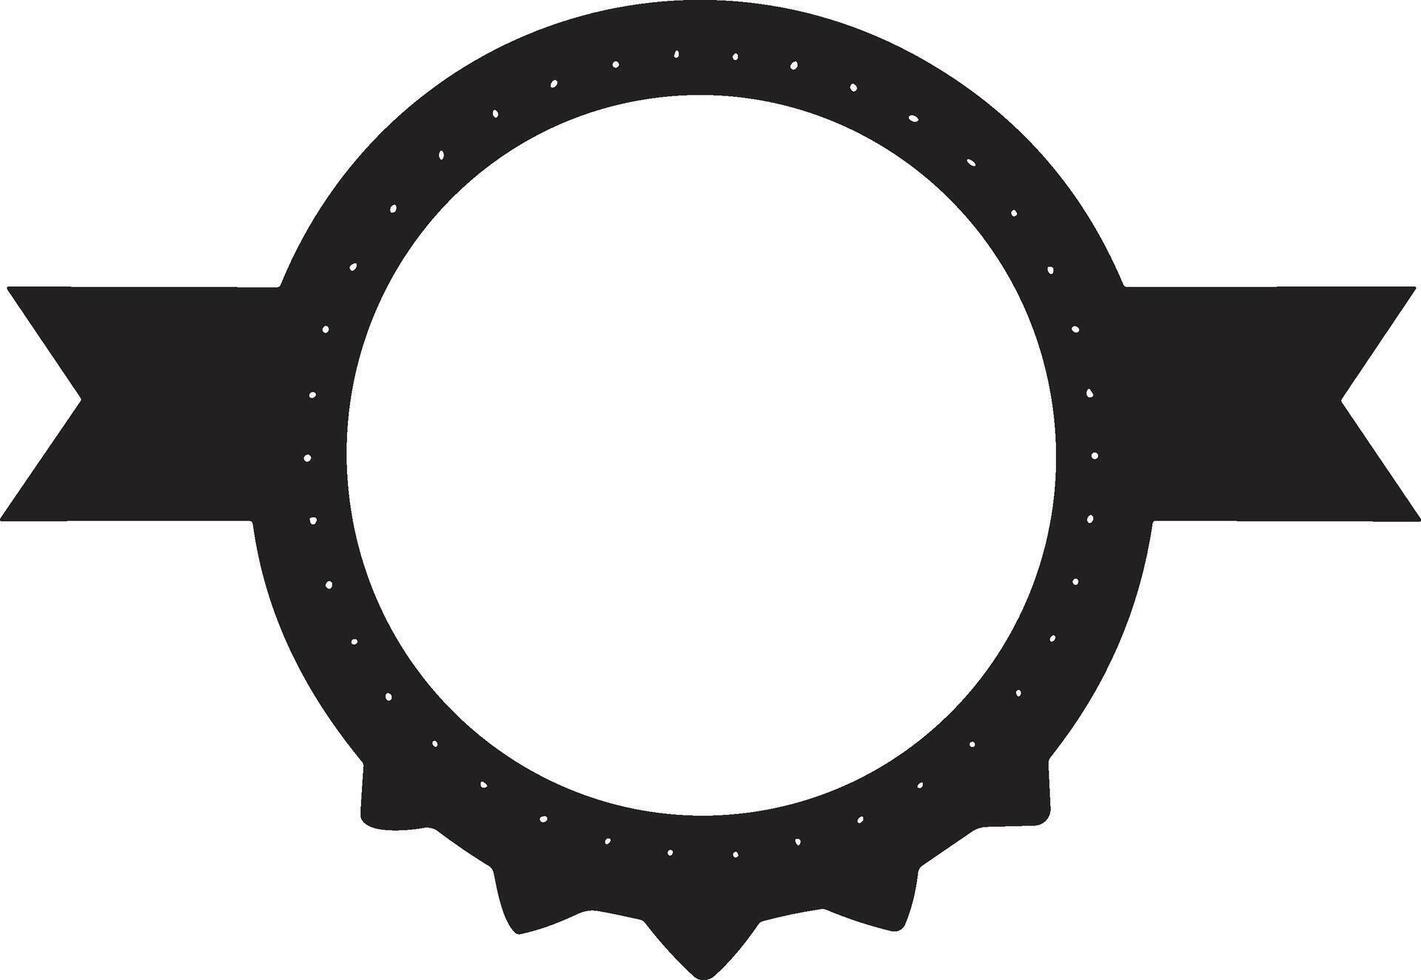 ancien ruban logo dans moderne minimal style vecteur